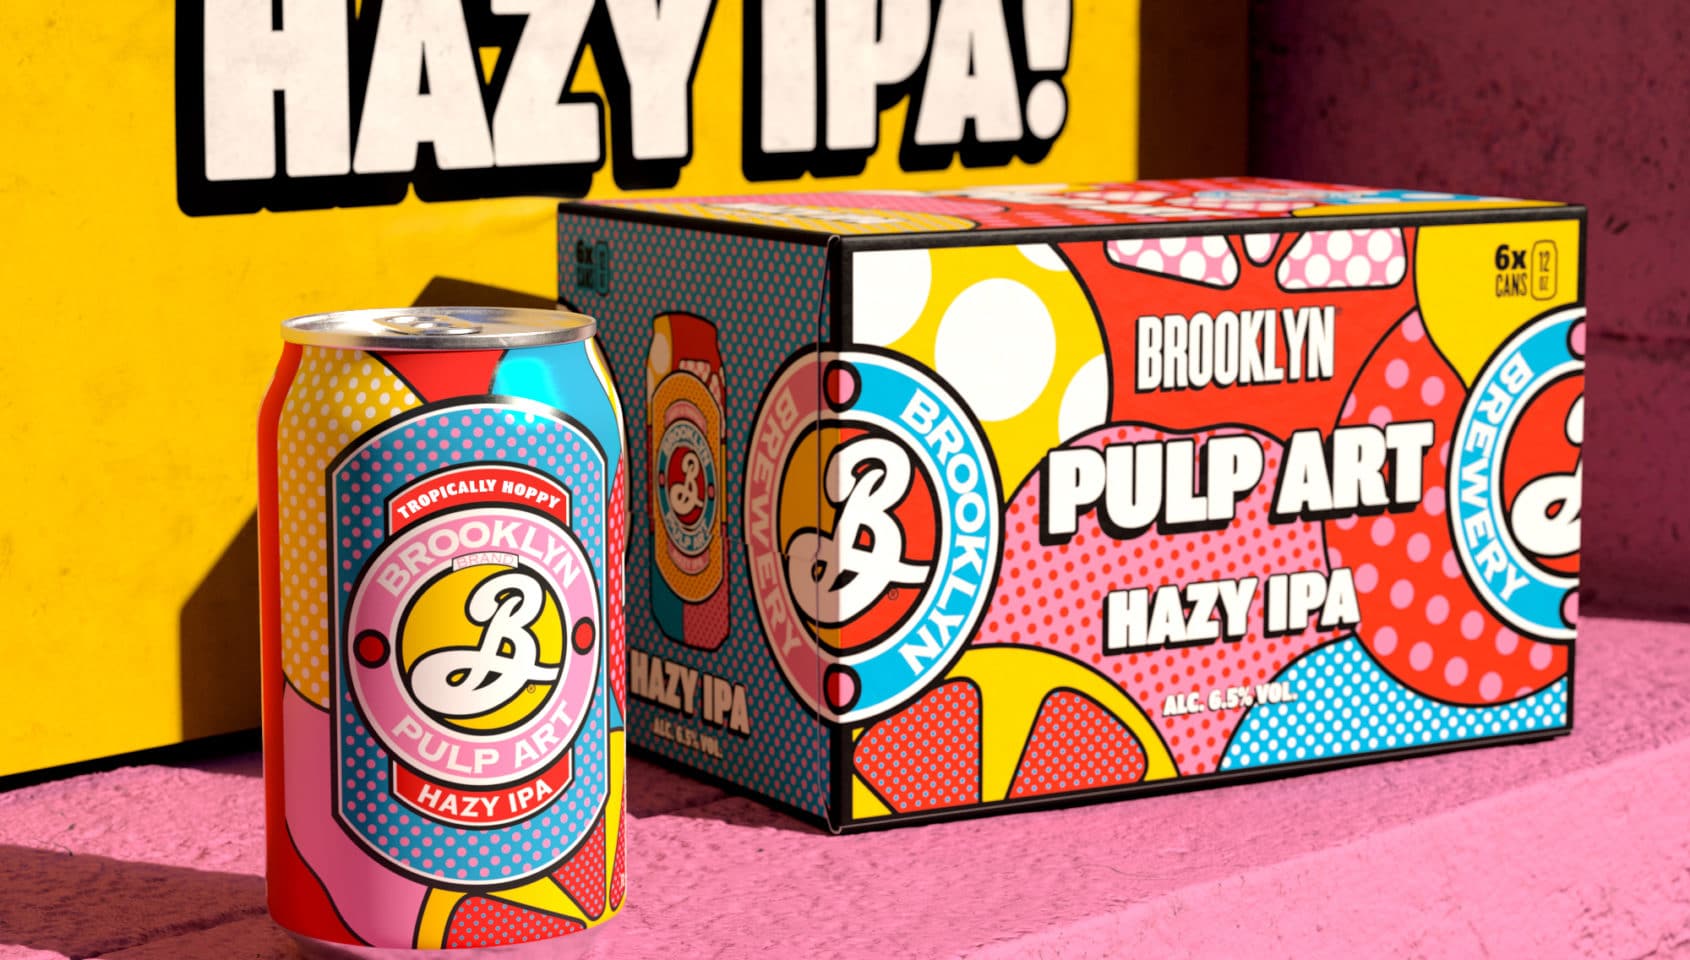 Pulp Art Hazy IPA Brooklyn Brewery